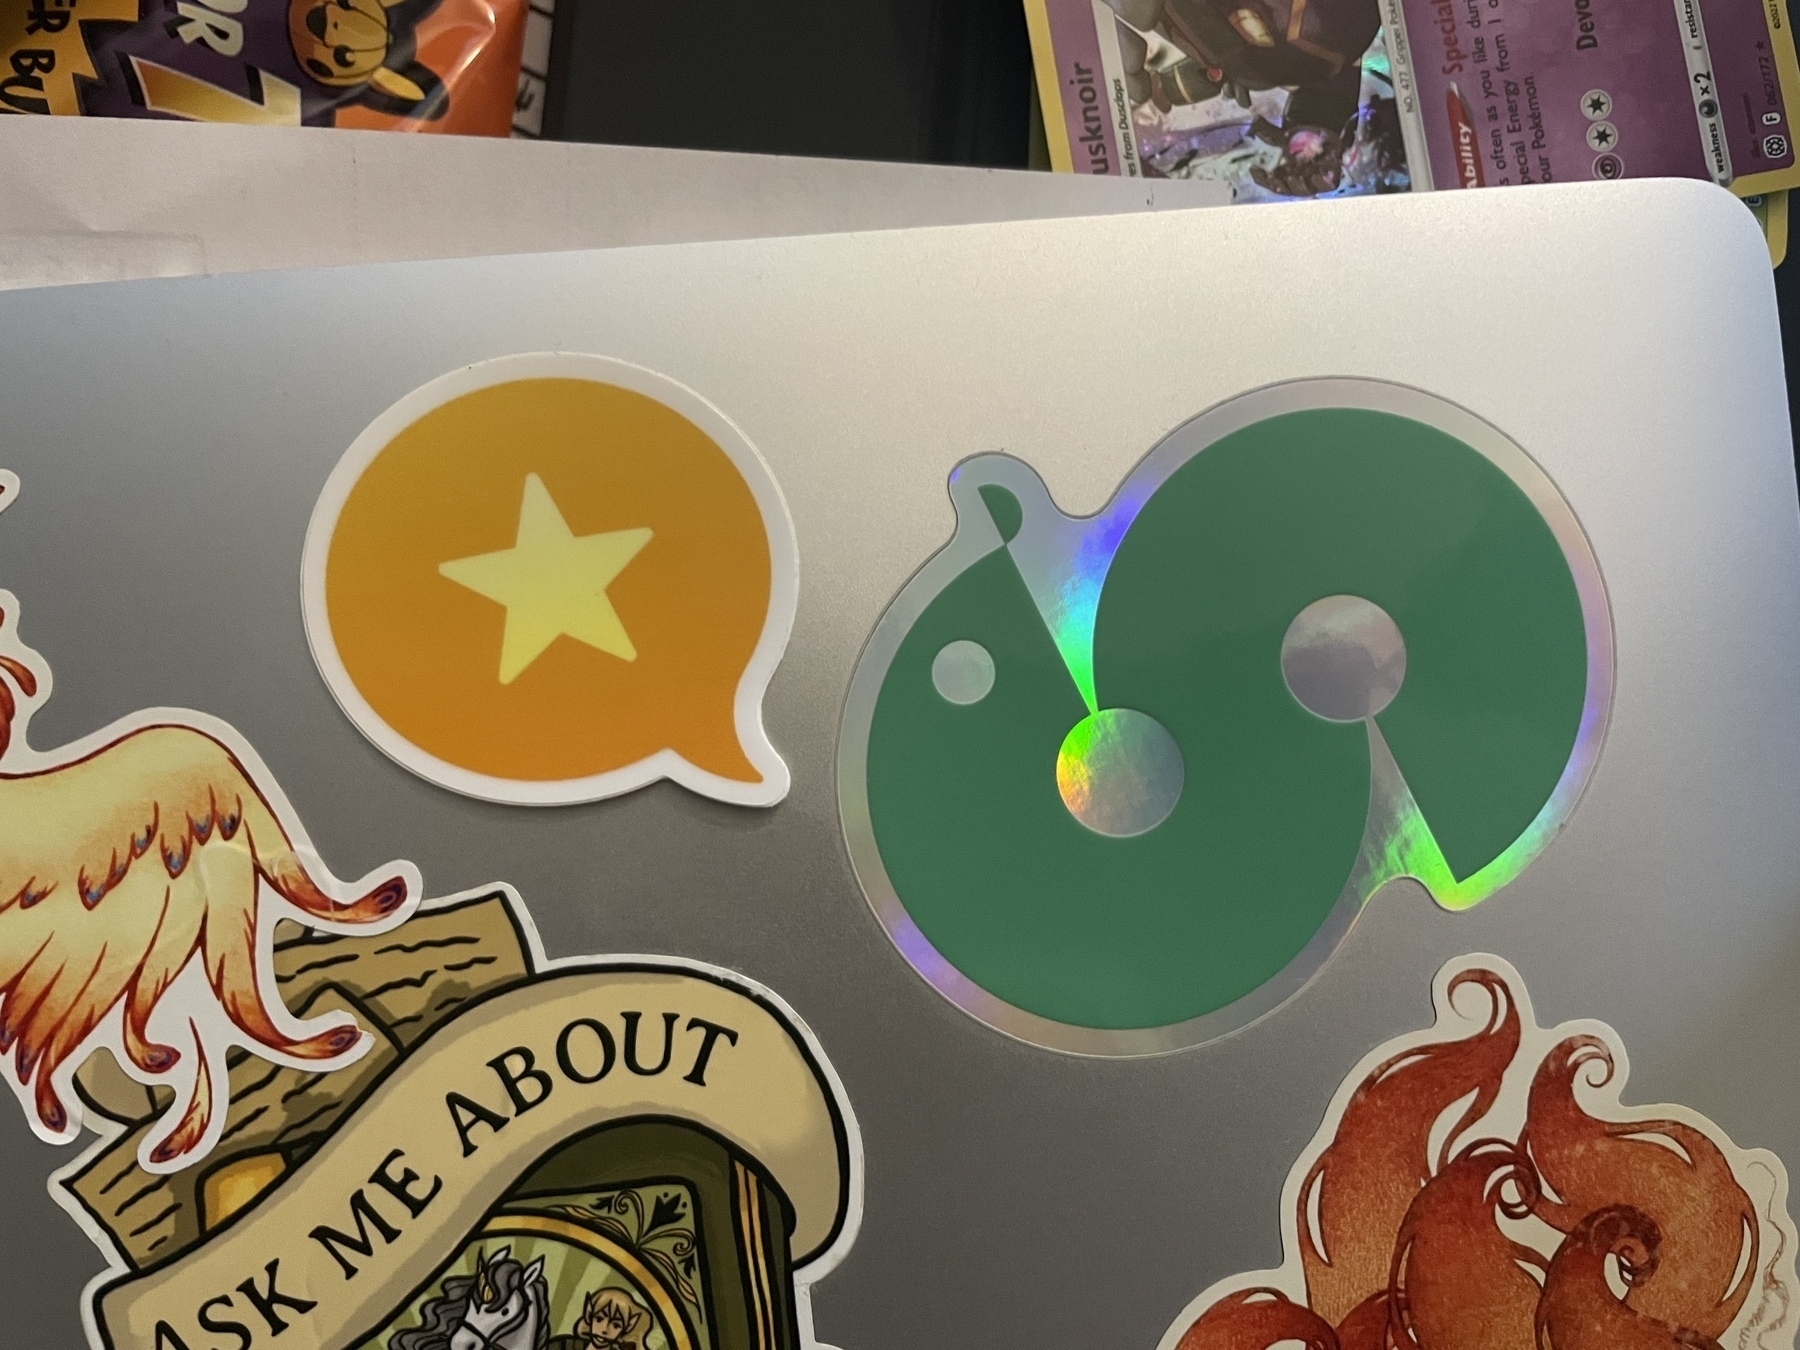 A Micro-dot-blog sticker on top of a laptop next to a Smolblog sticker